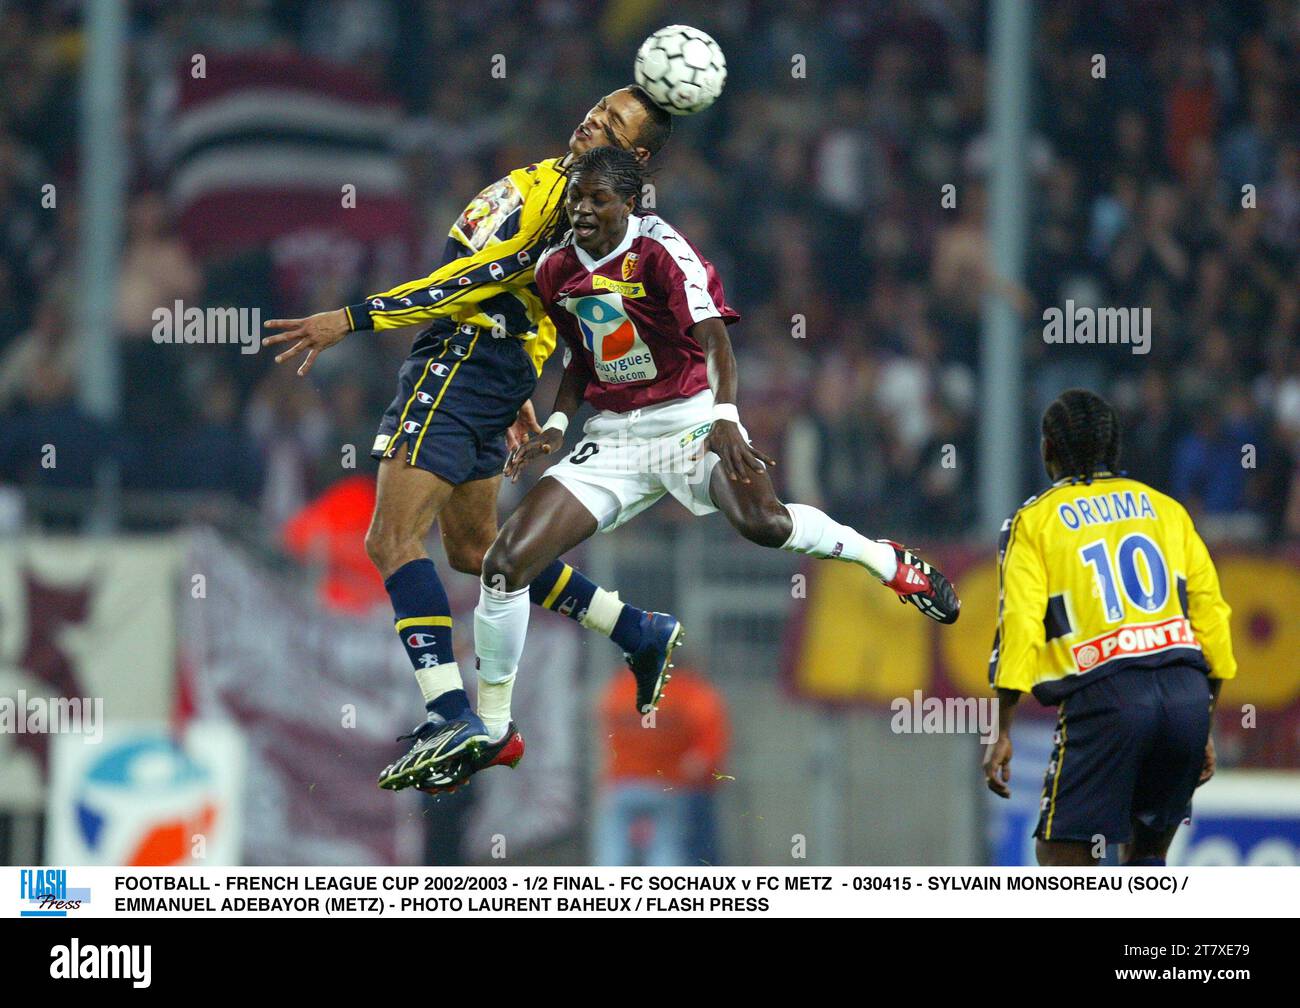 FOOTBALL - FRENCH LEAGUE CUP 2002/2003 - 1/2 FINAL - FC SOCHAUX v FC METZ - 030415 - SYLVAIN MONSOREAU (SOC) / EMMANUEL ADEBAYOR (METZ) - PHOTO LAURENT BAHEUX / FLASH PRESS Stock Photo